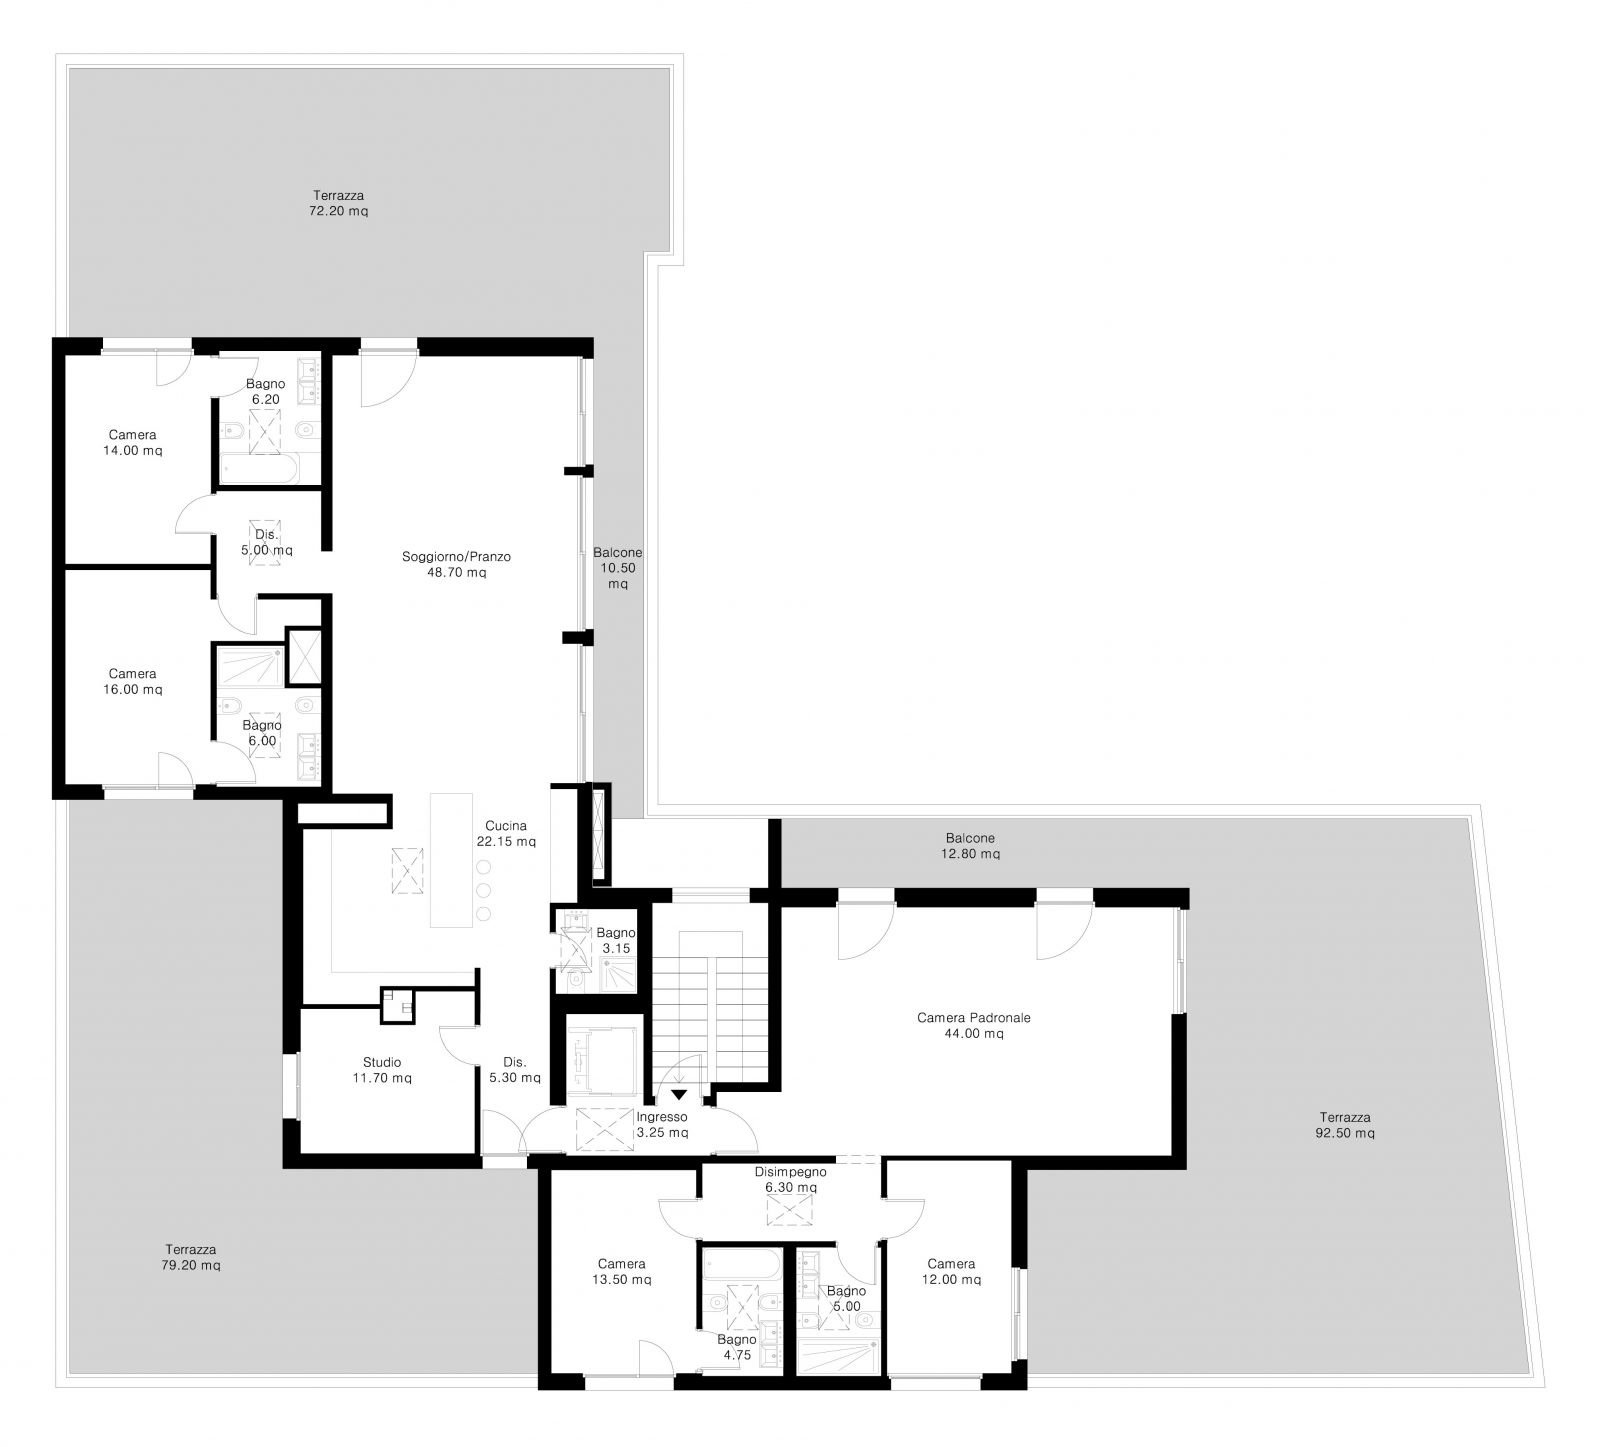 Penthouse - 7.5 Rooms Planimetria